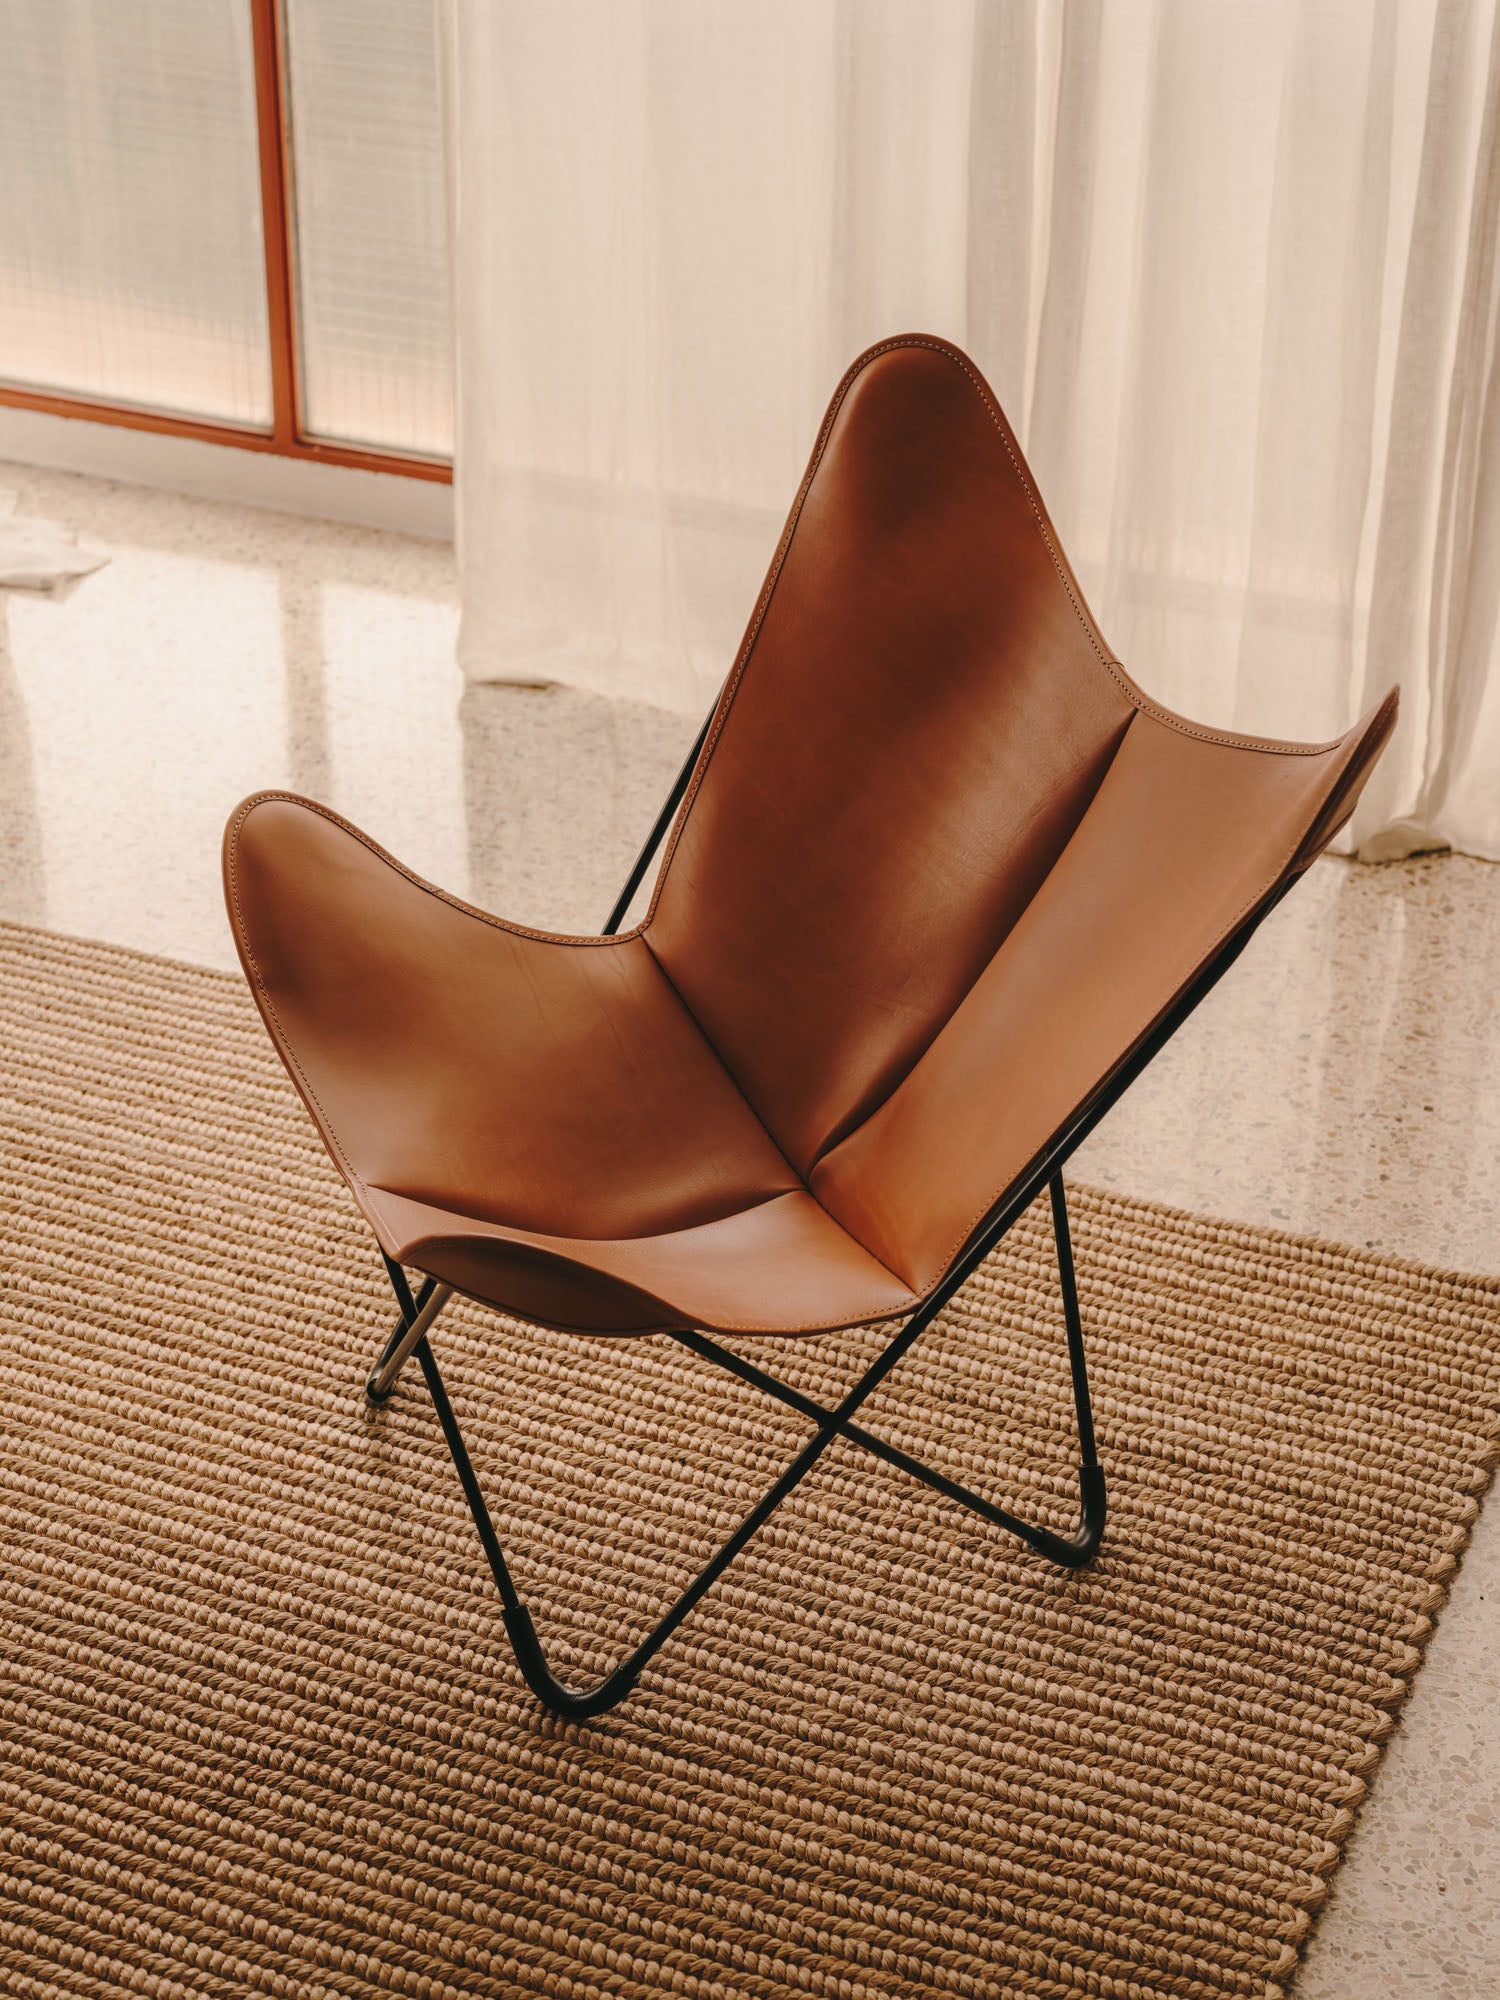 BONET BKF CHAIR - Butterfly Leather Chair by Bonet, Ferrari 